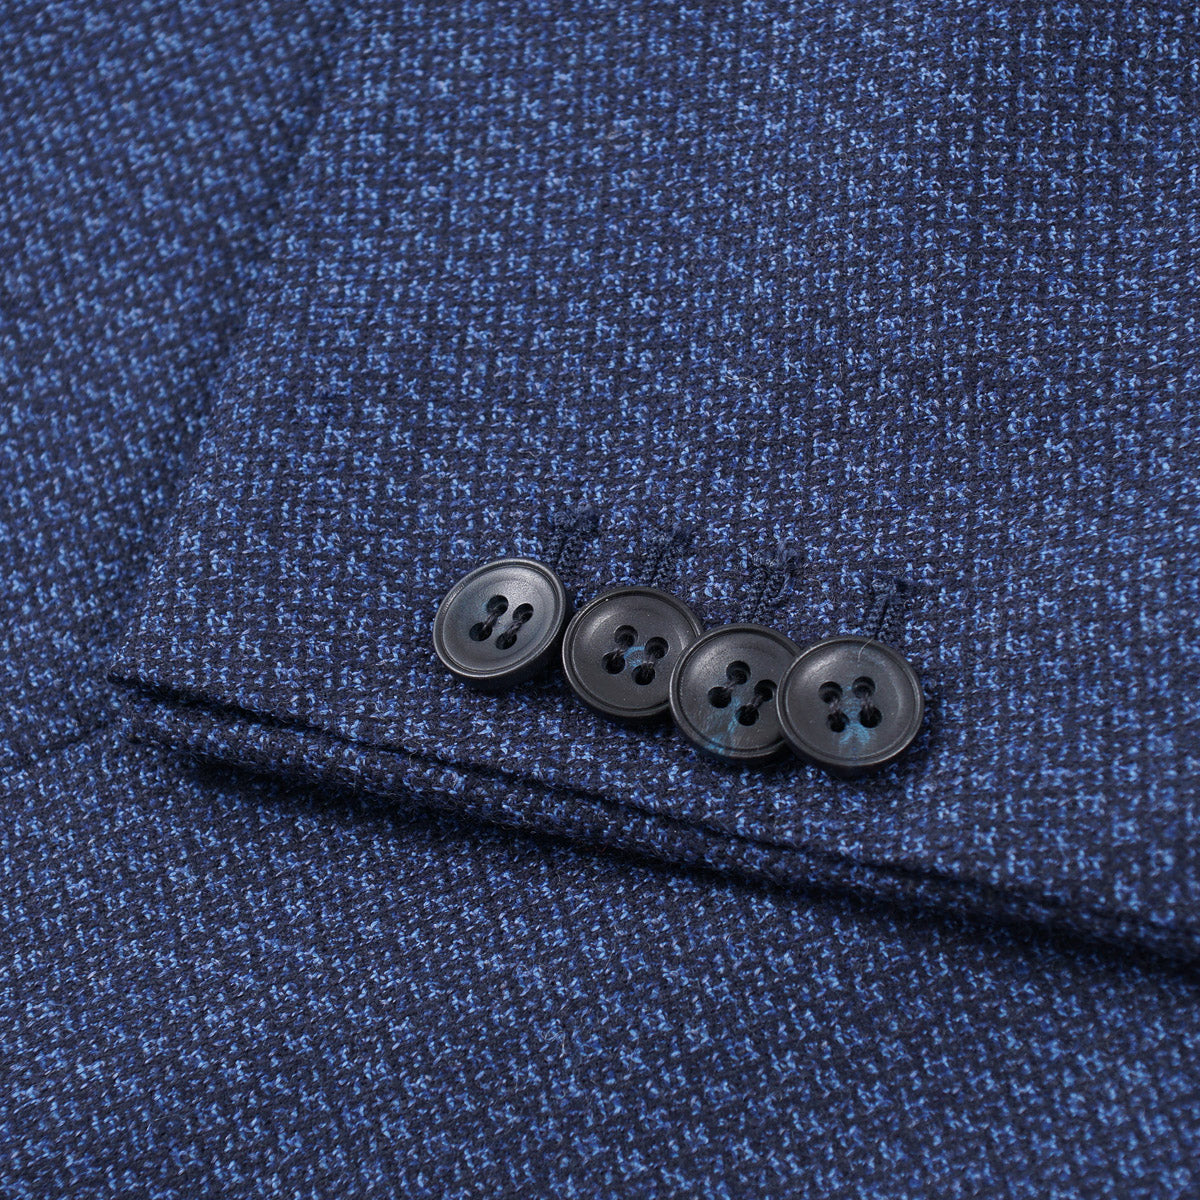 Sartorio Soft-Constructed Wool Sport Coat - Top Shelf Apparel